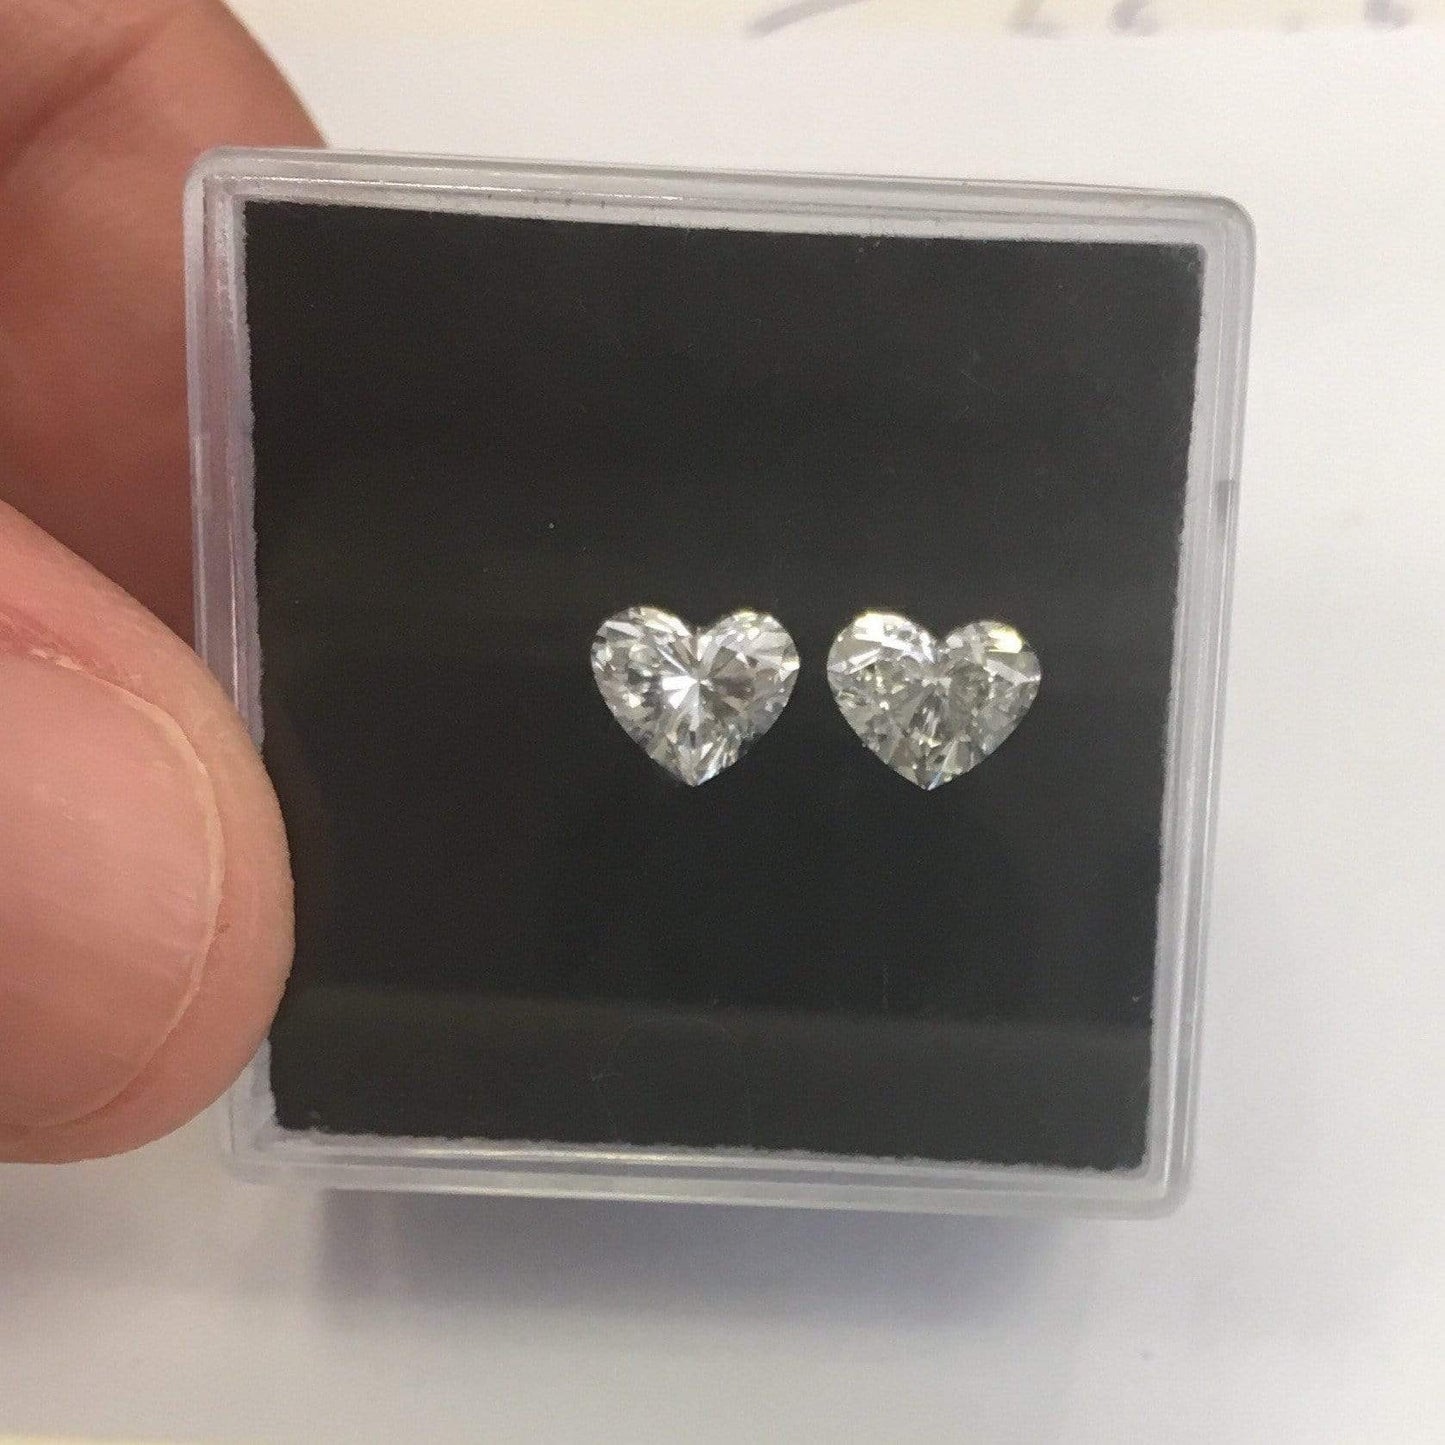 loose diamonds - Engagement Rings